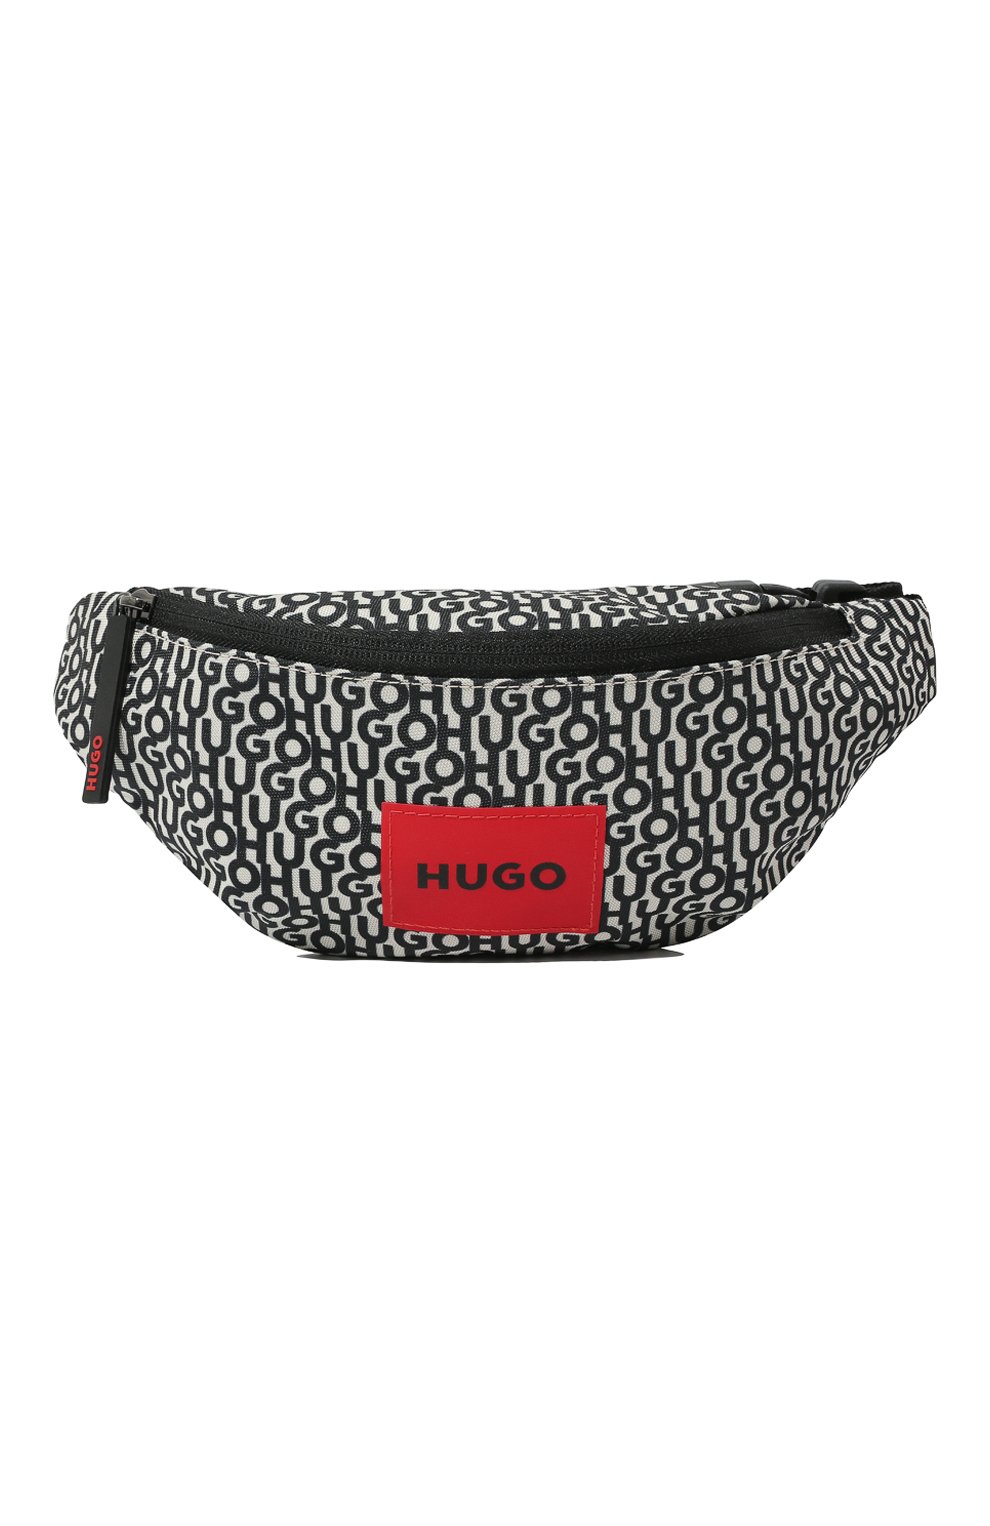 Текстильная поясная сумка HUGO 50475029, цвет чёрно-белый, размер NS